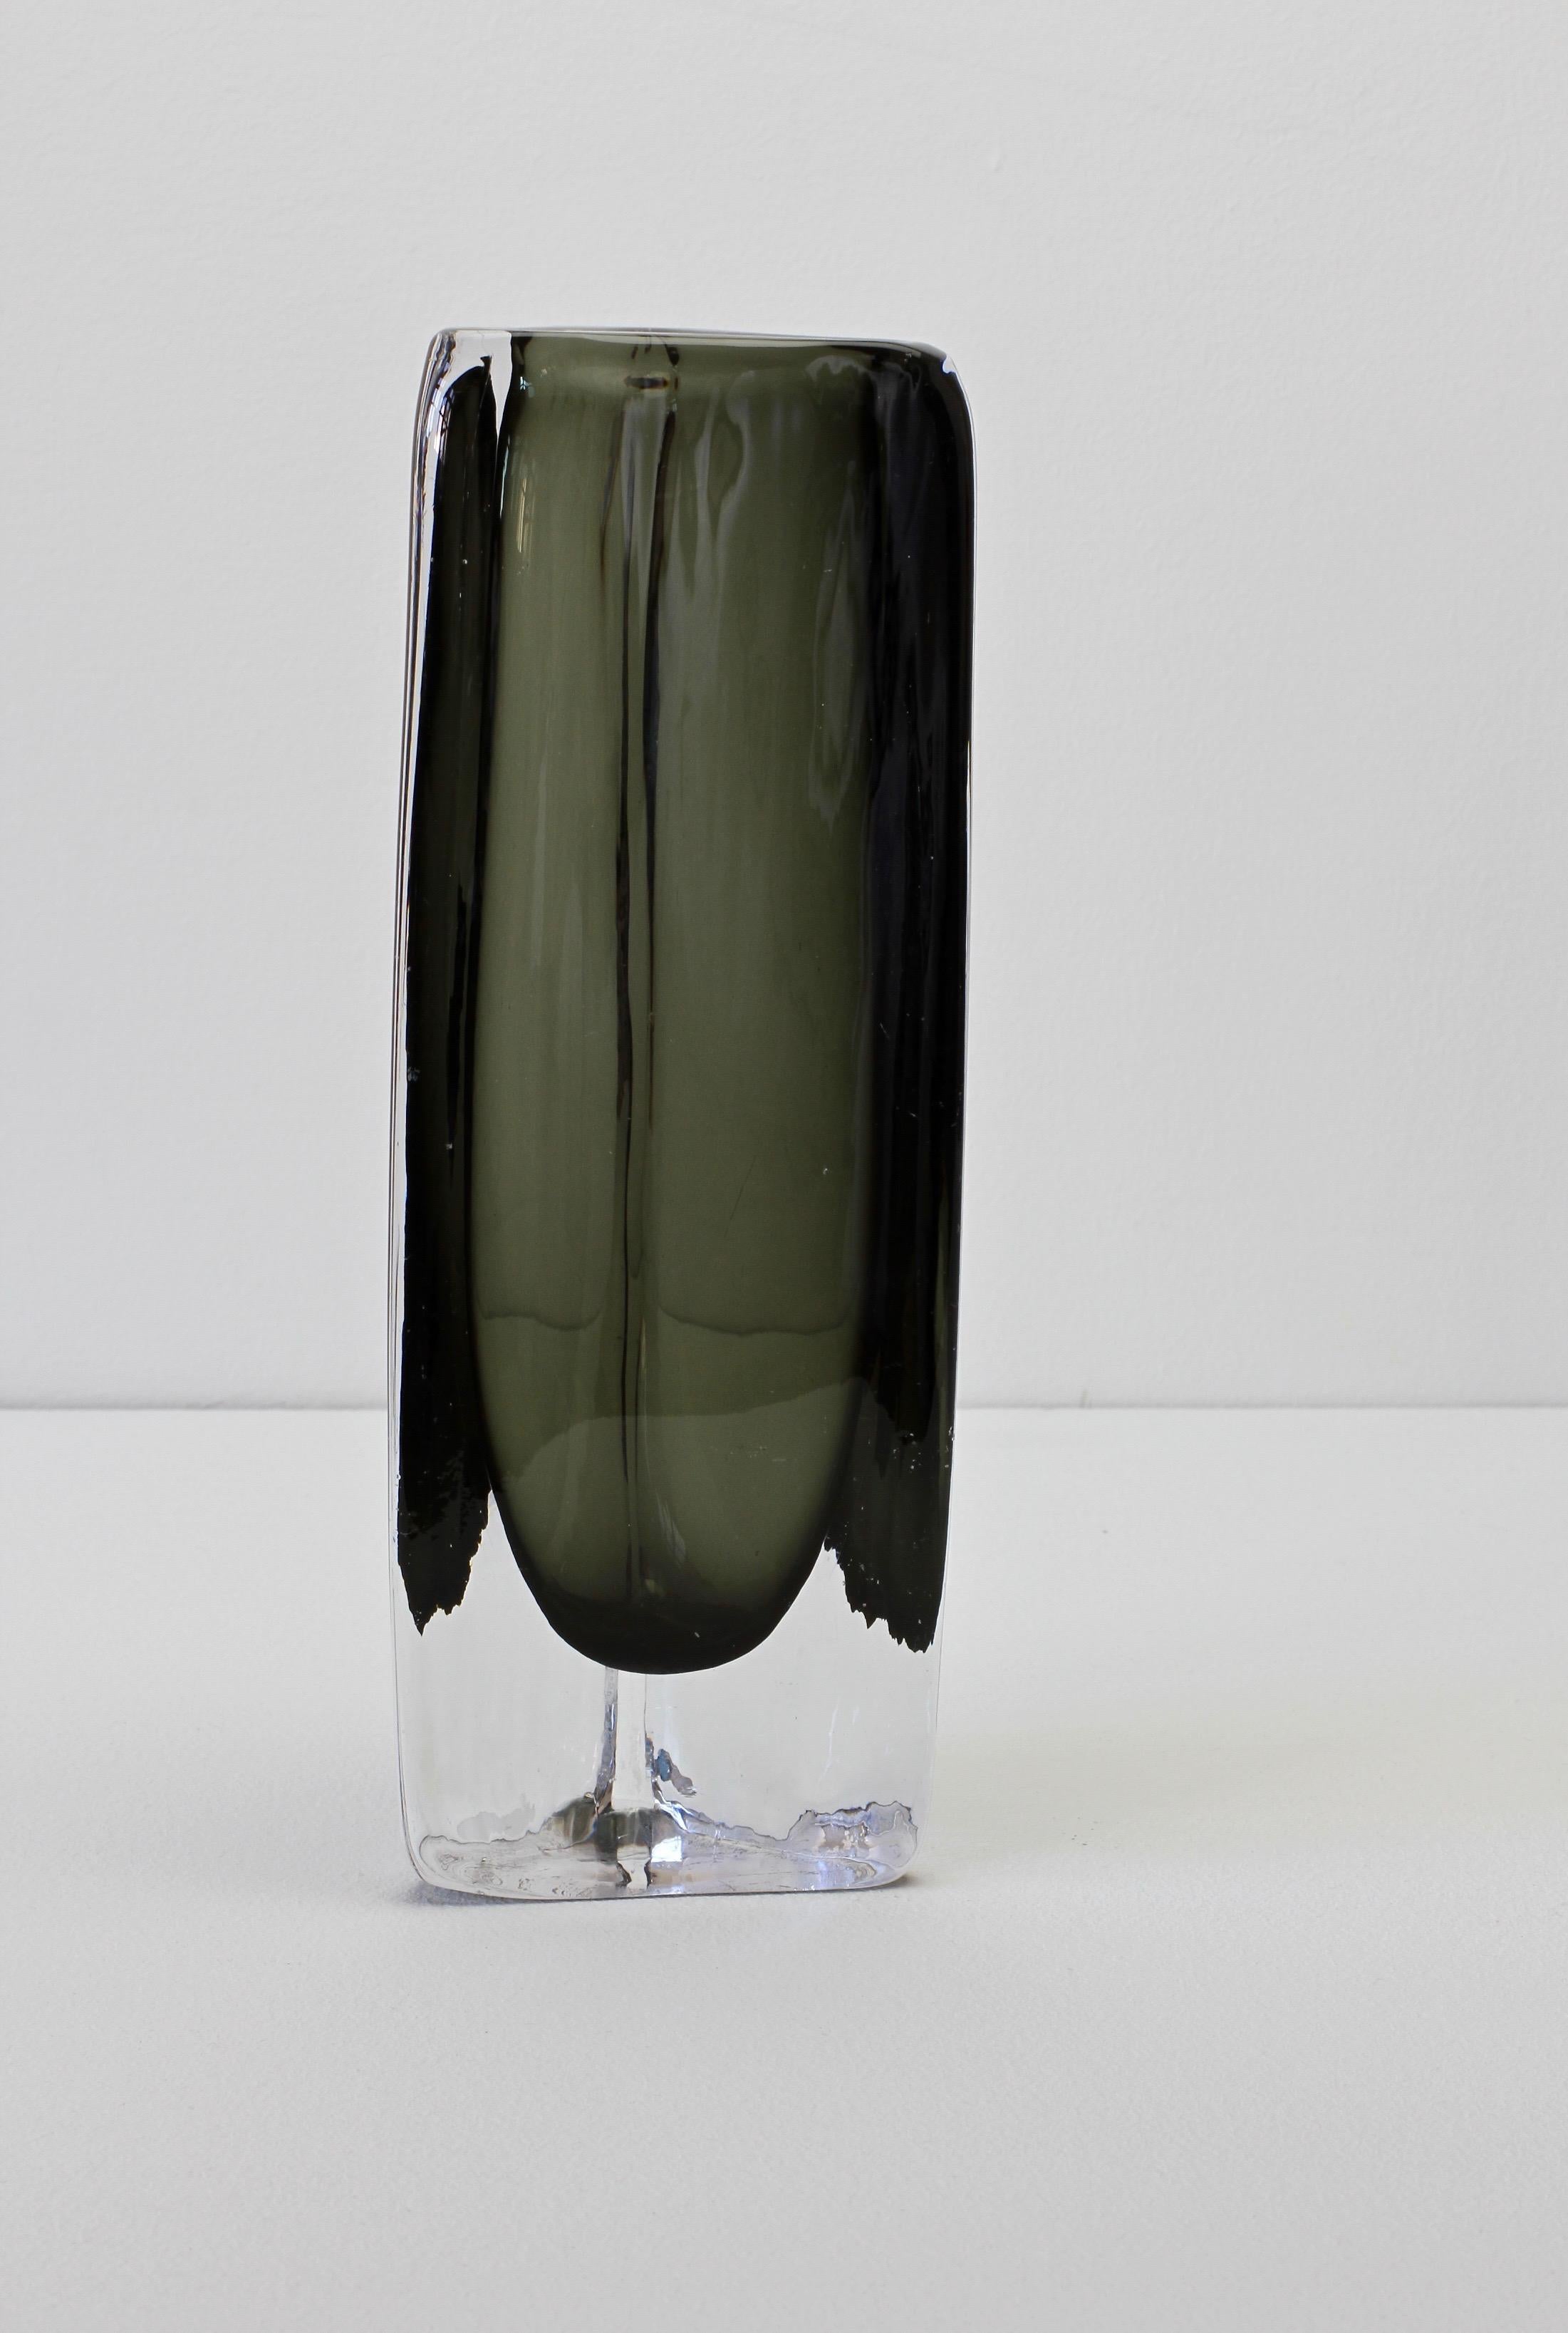 Mid-Century Modern Grand vase en verre Sommerso des années 1950 signé Nils Landberg pour Orrefors Glass en vente